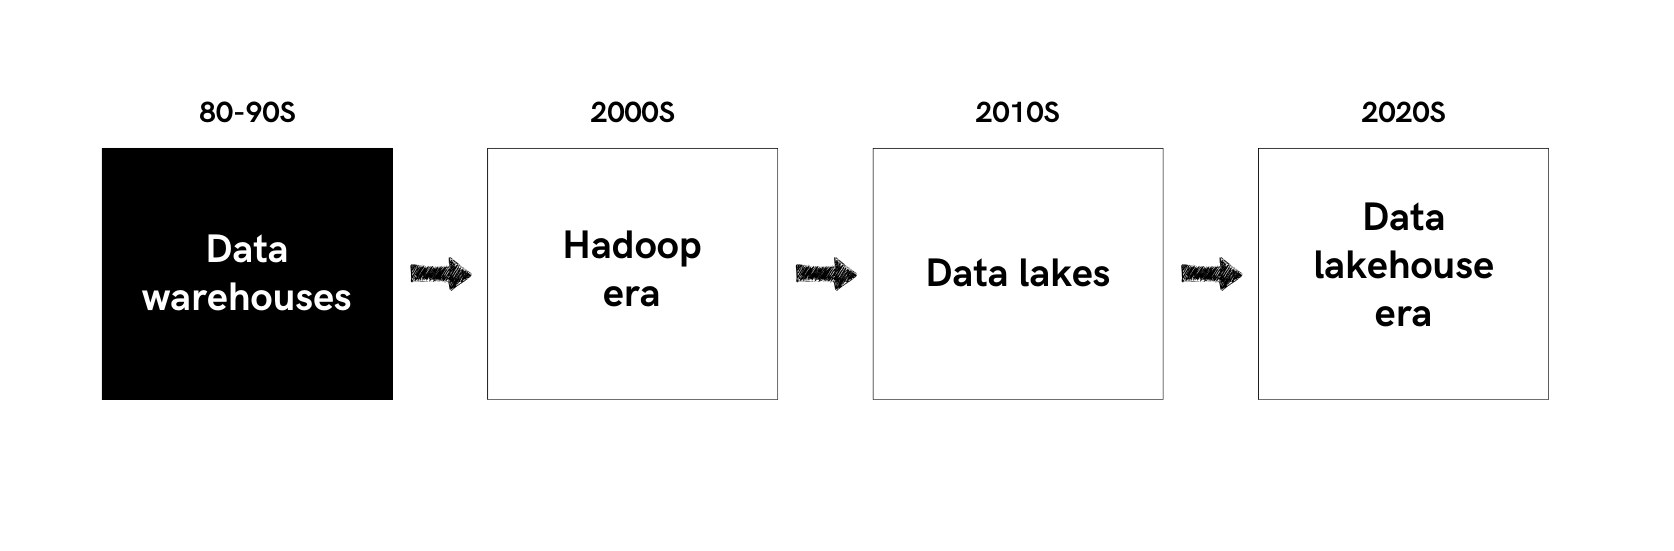 History of Data Lakehouse - Warehouses